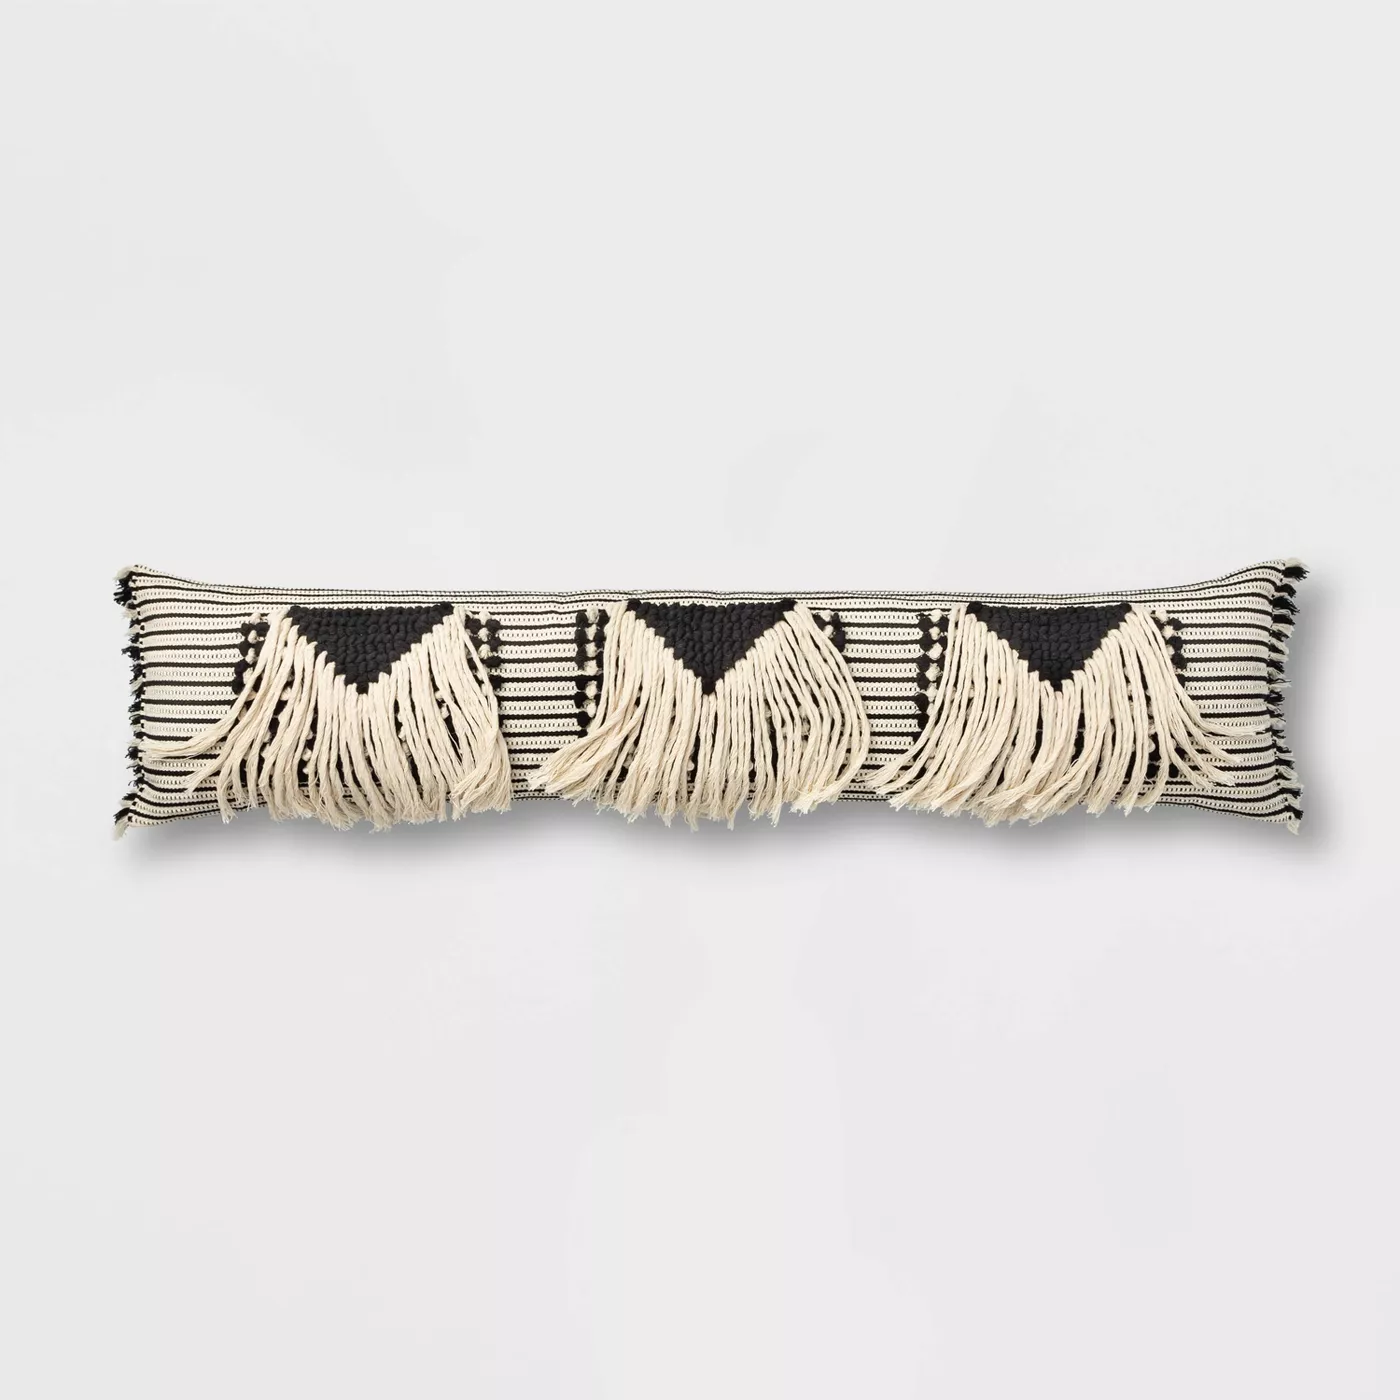 Bed Lumbar Global Fringe Decorative Pillow Black/Cream - Opalhouse™ - image 1 of 8